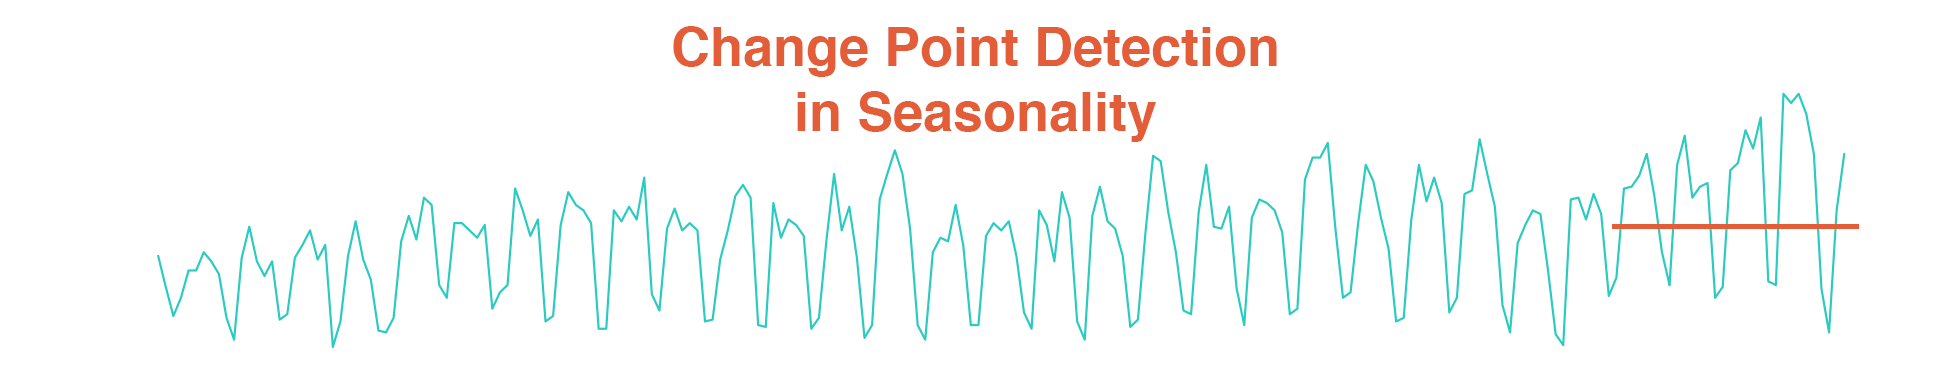 change-point-seasonality